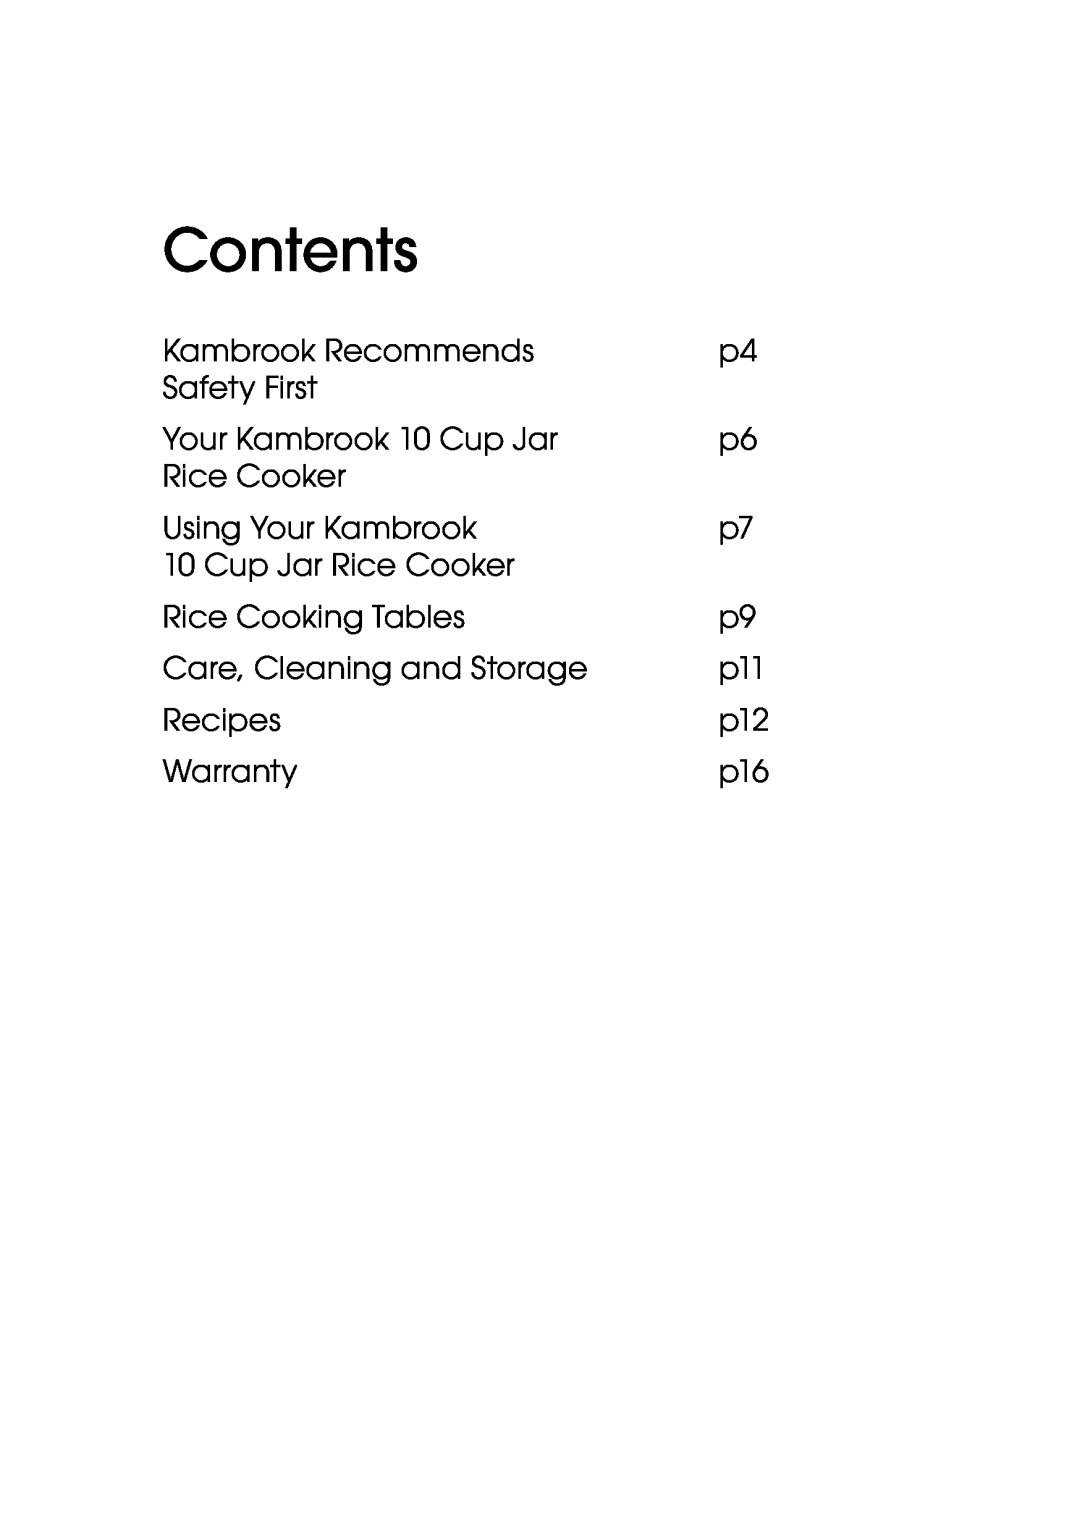 Kambrook KRC400 manual Contents 